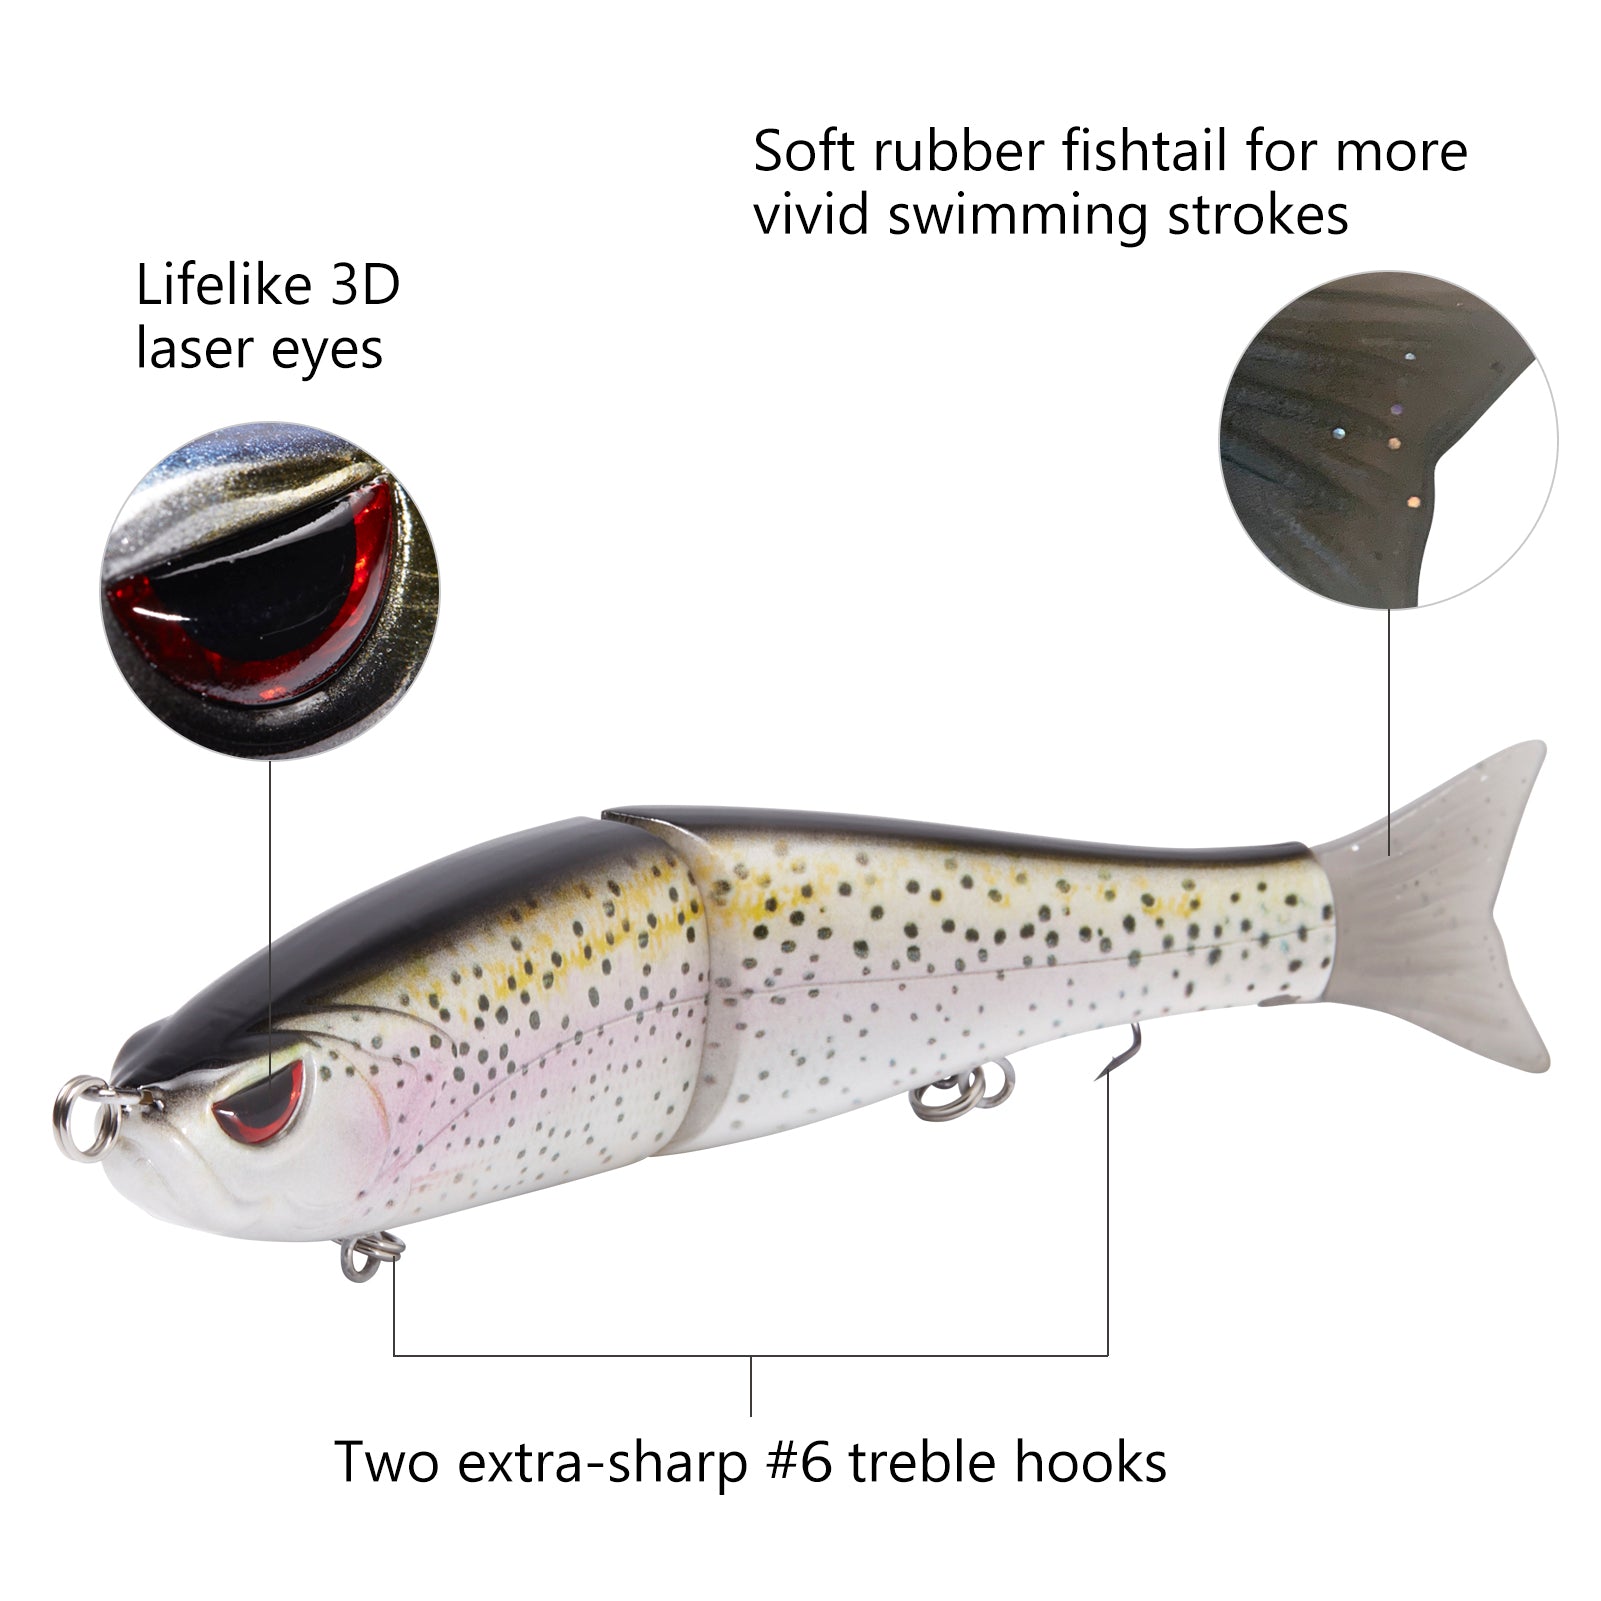 SwimShad Glide Baits Single-Jointed Hard Fishing Lure